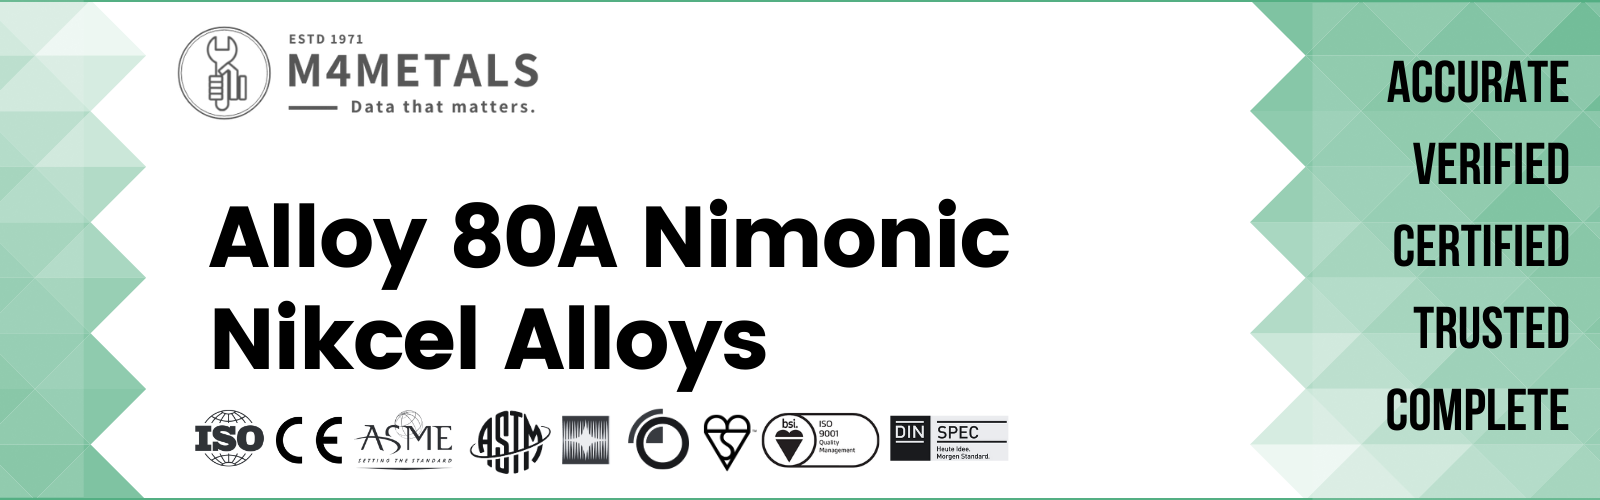 Nimonic Alloy 80A